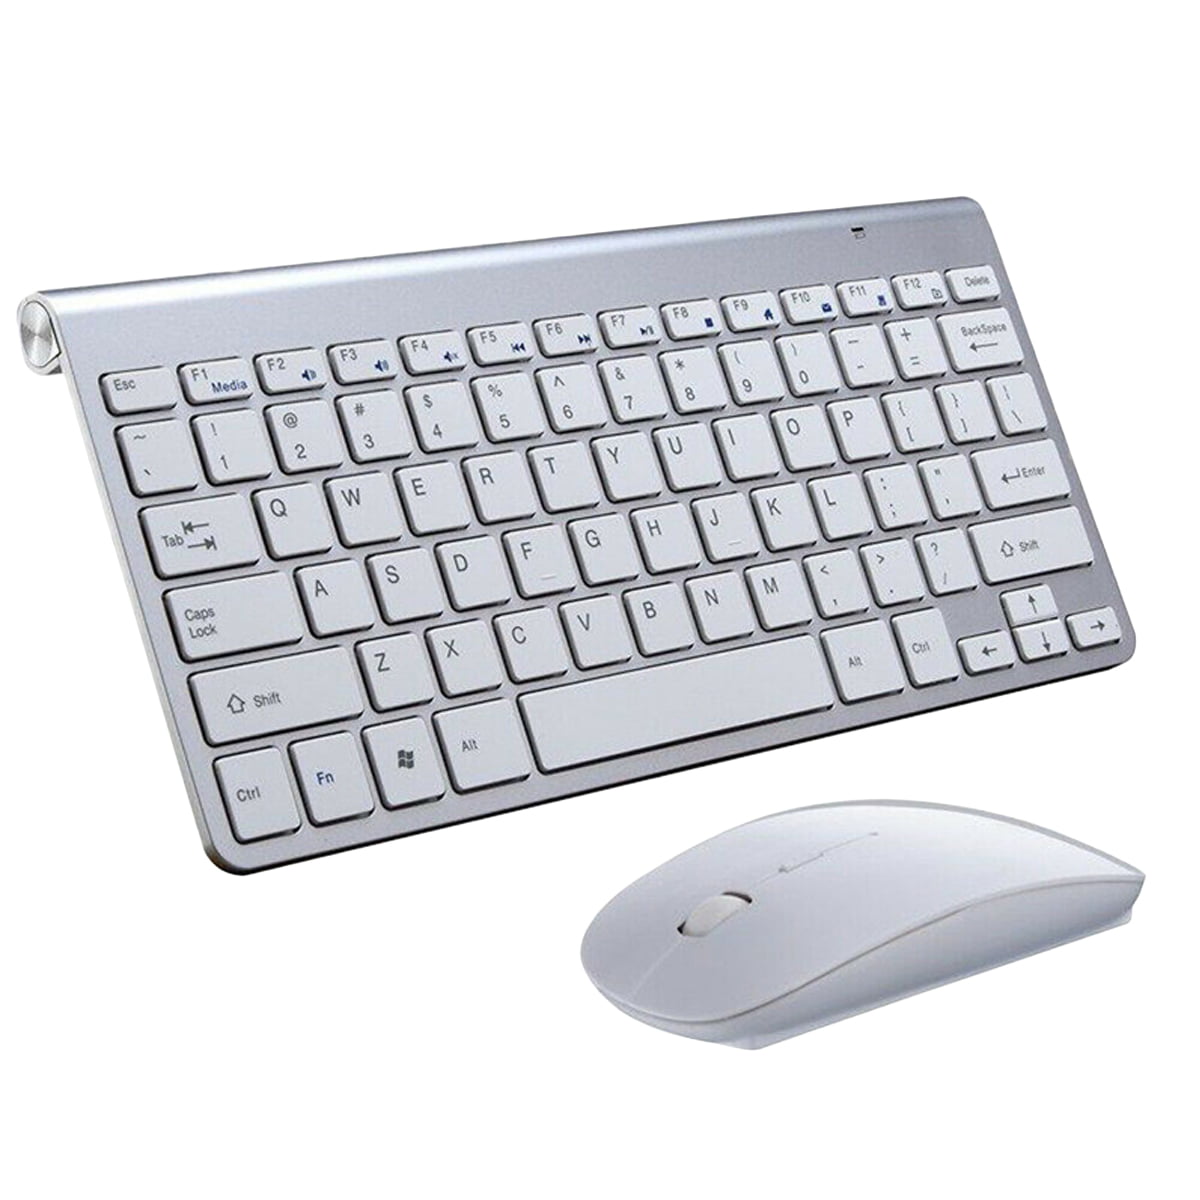 configure mac keyboard for windows 10